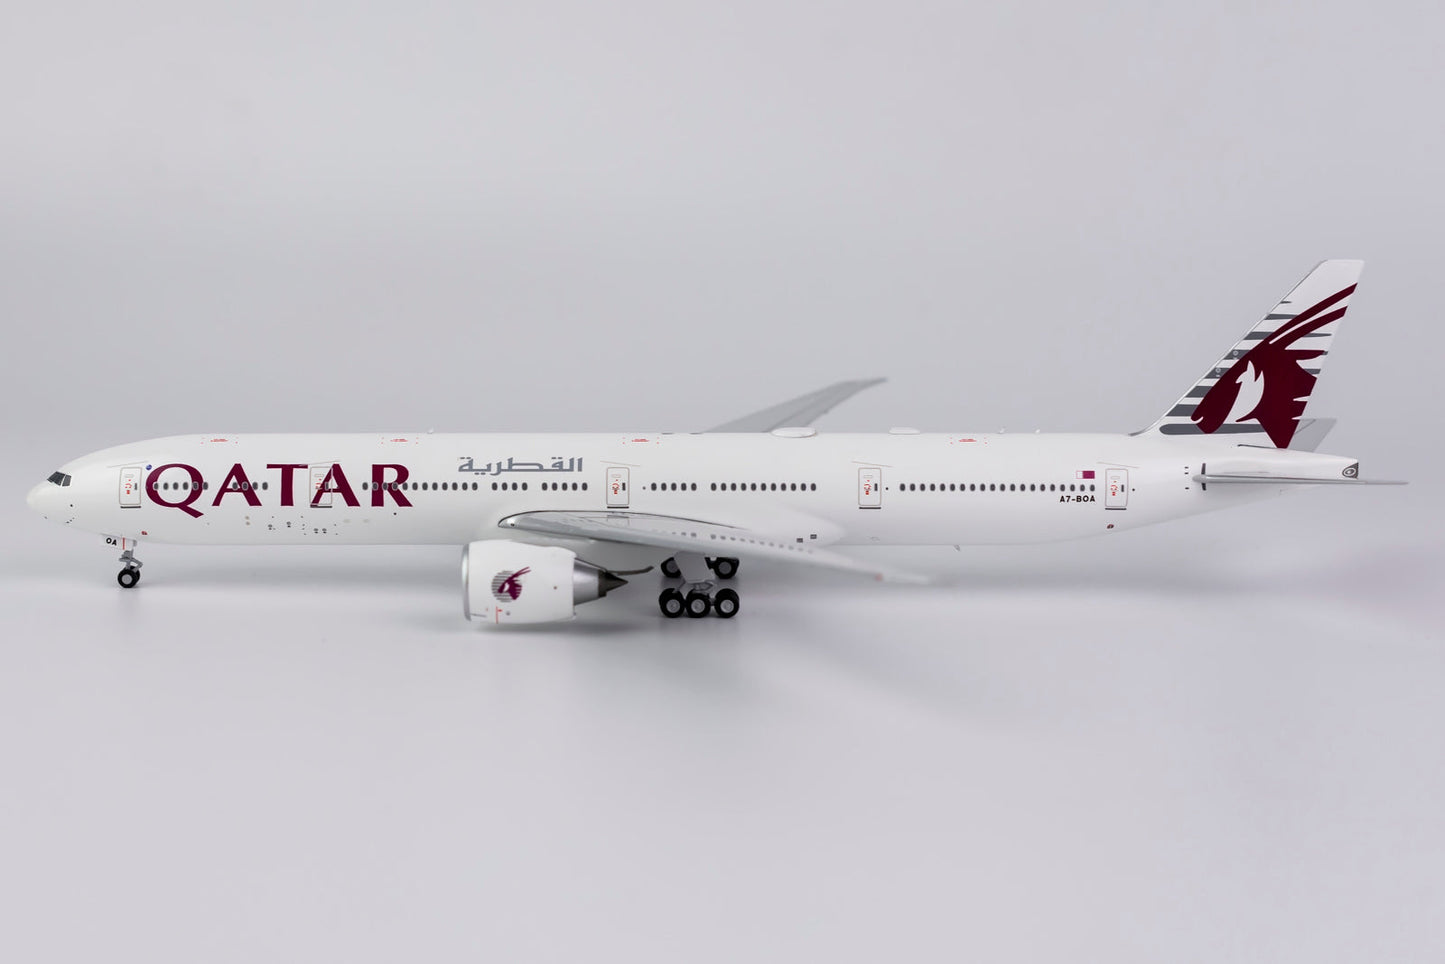 1/400 Qatar Airways B 777-300ER NG Models 73011